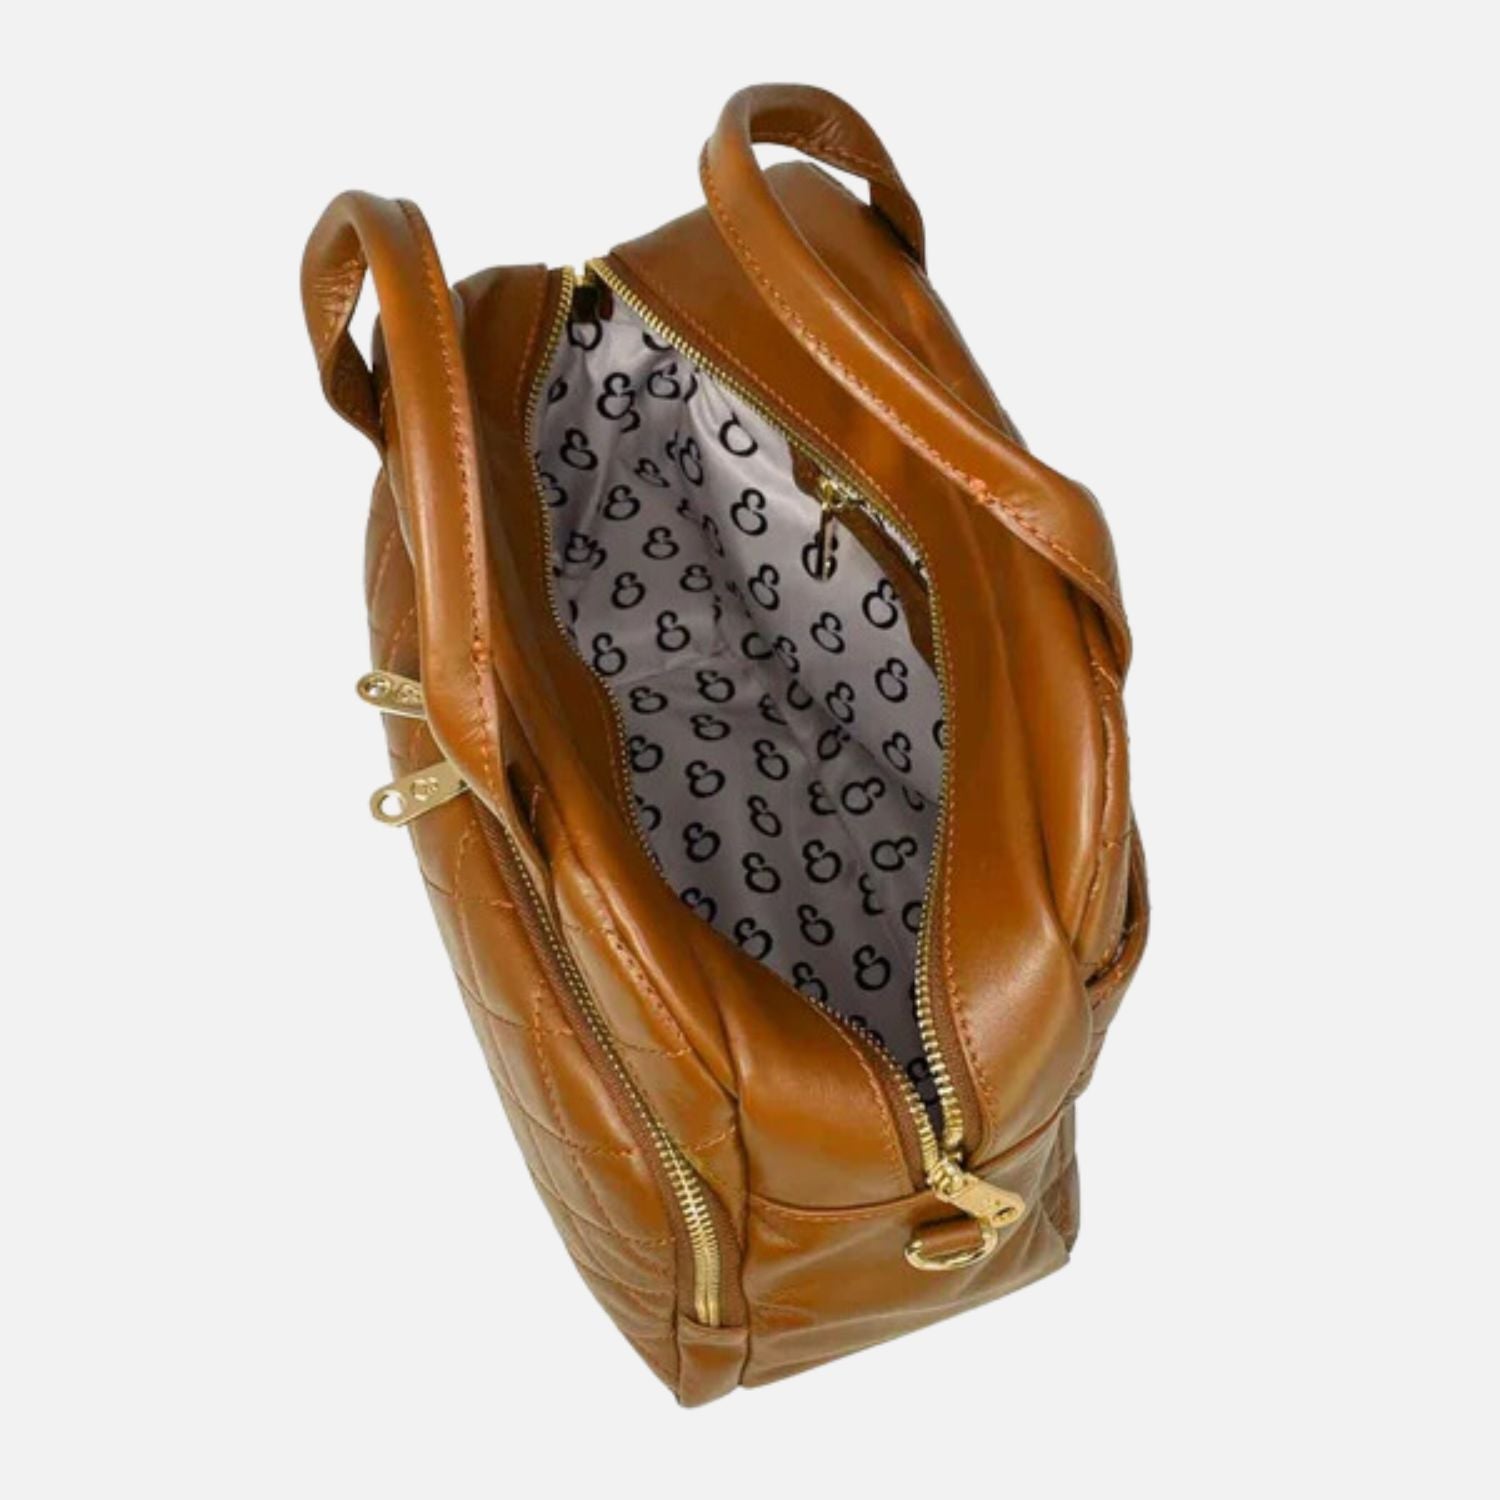 Megane Matelassé Leather – Handbag